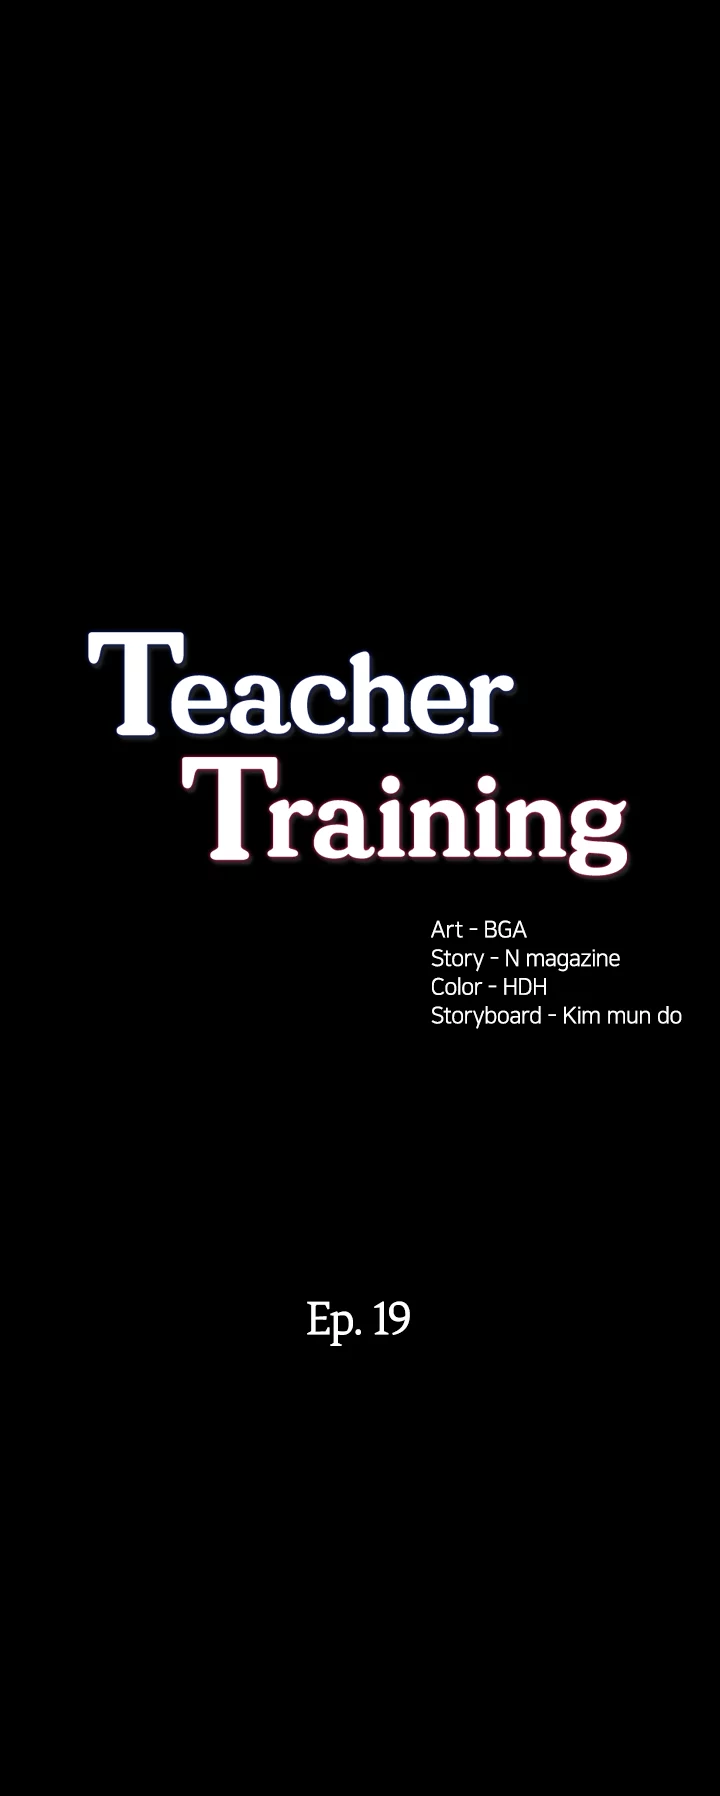 Teacher Training image